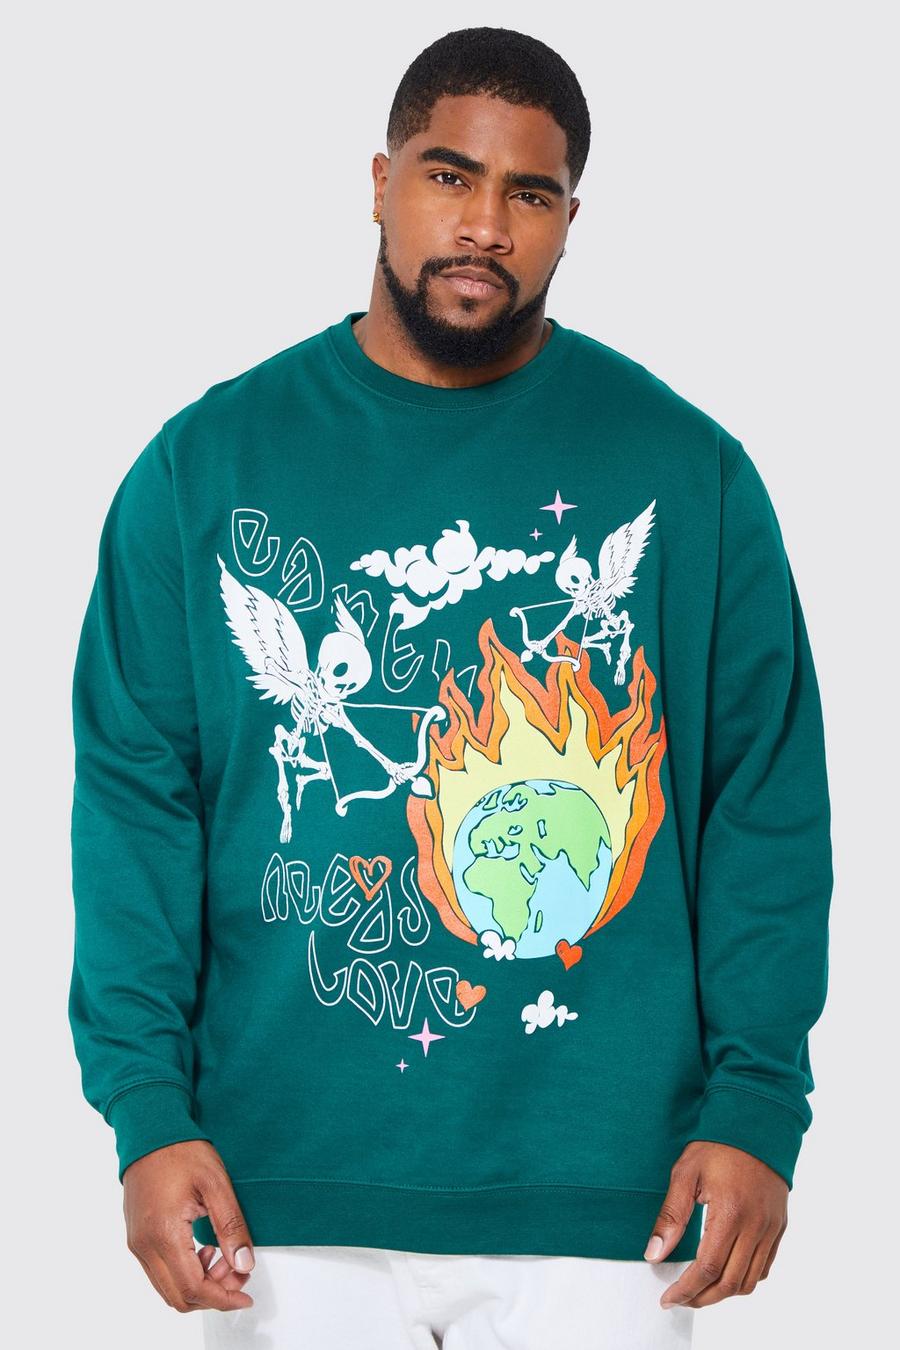 Forest green Plus Planet Needs Love Sweatshirt